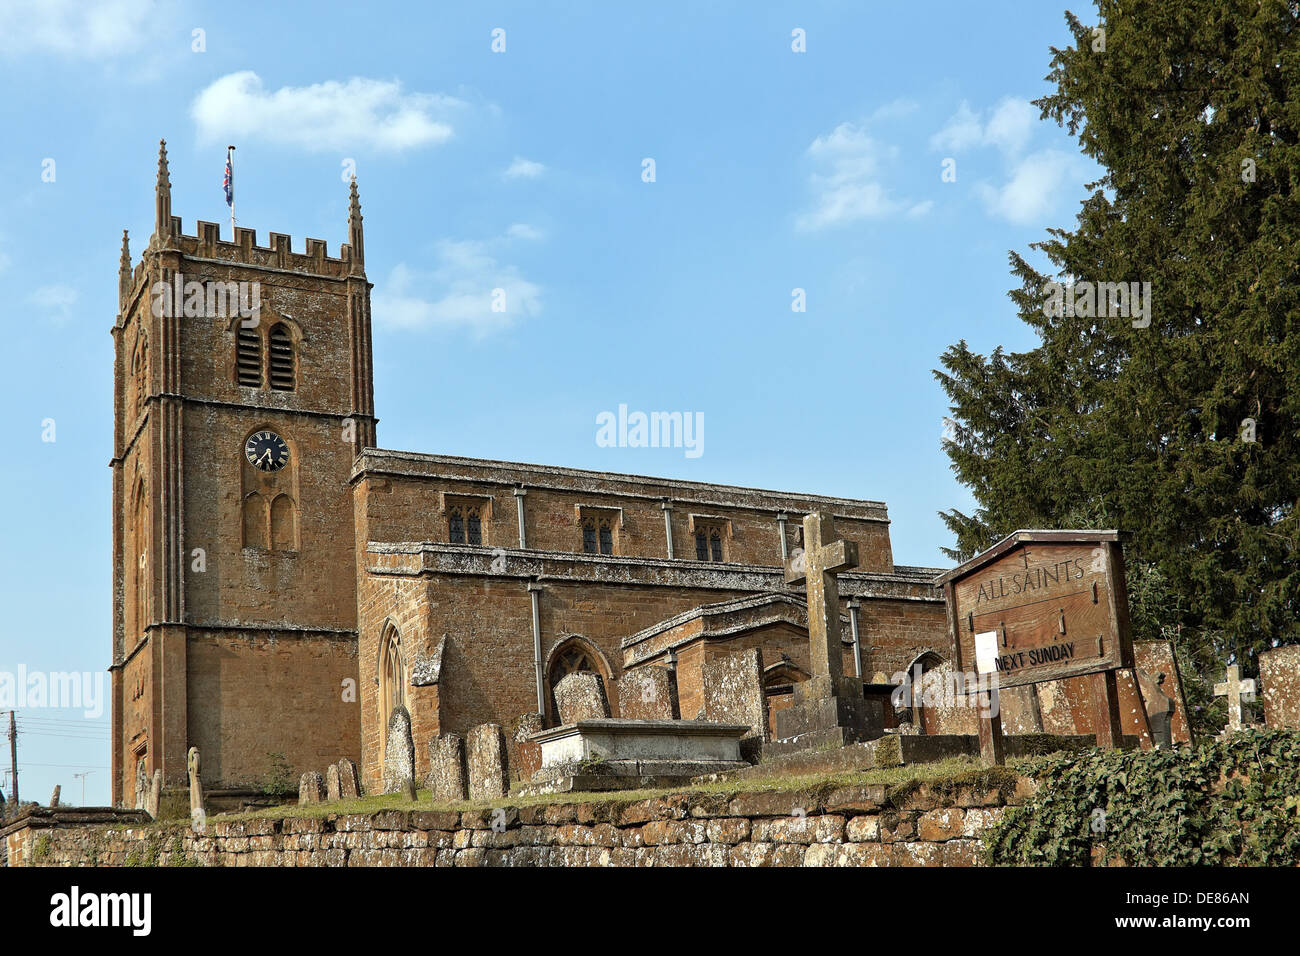 All Saints Church, a 14th century parish church,  Wroxton, Oxfordshire, England, Great Britain. Stock Photo